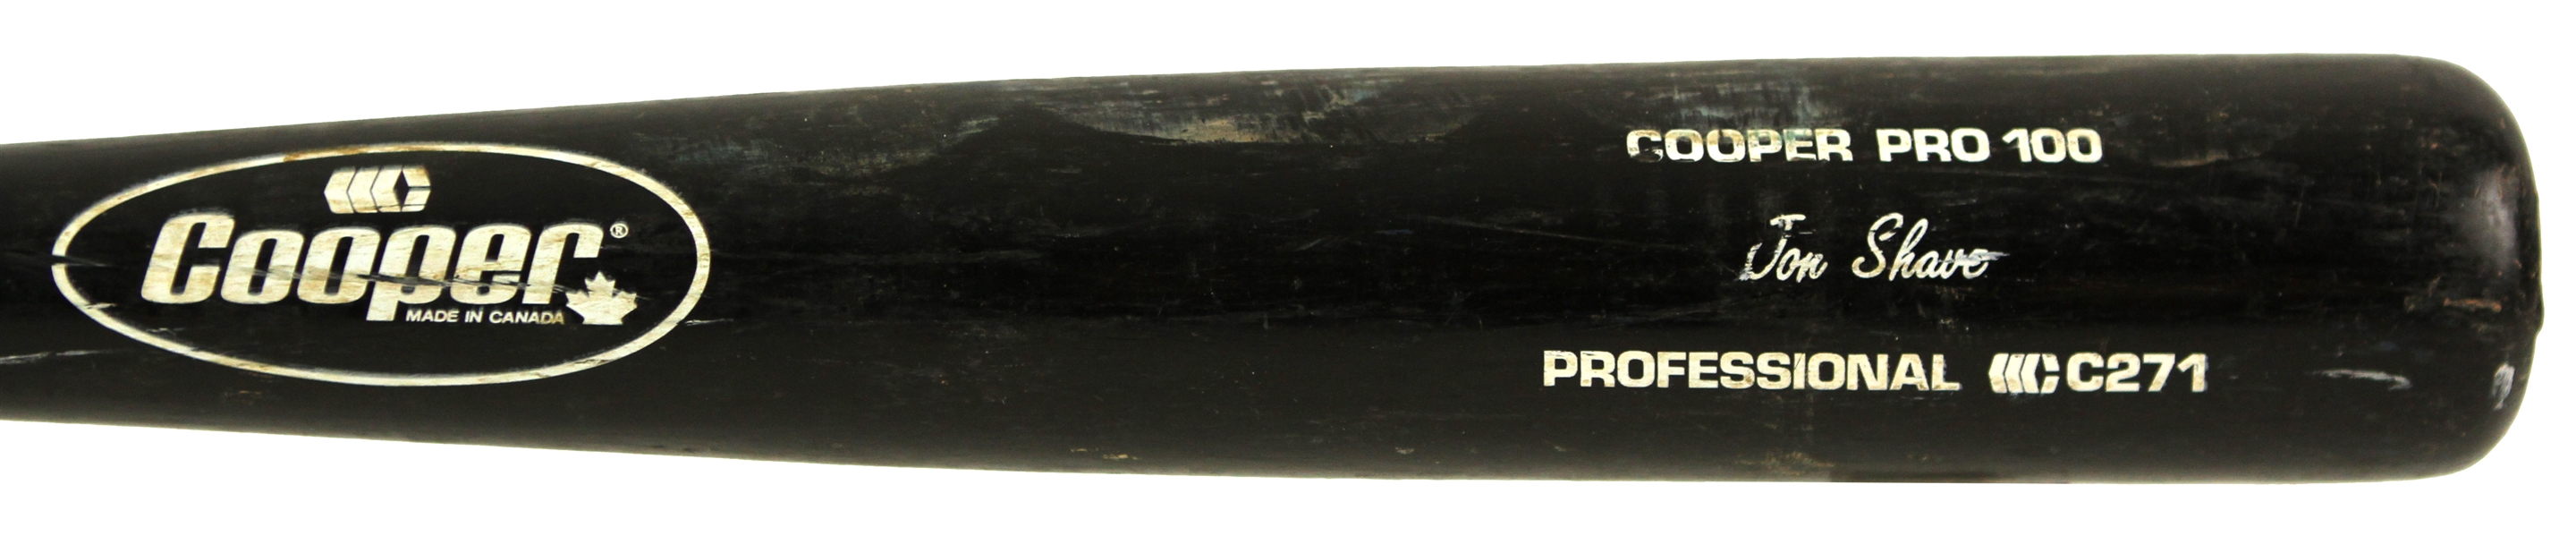 1993 Jon Shave Texas Rangers Cooper Professional Model Game Used Bat (MEARS LOA)